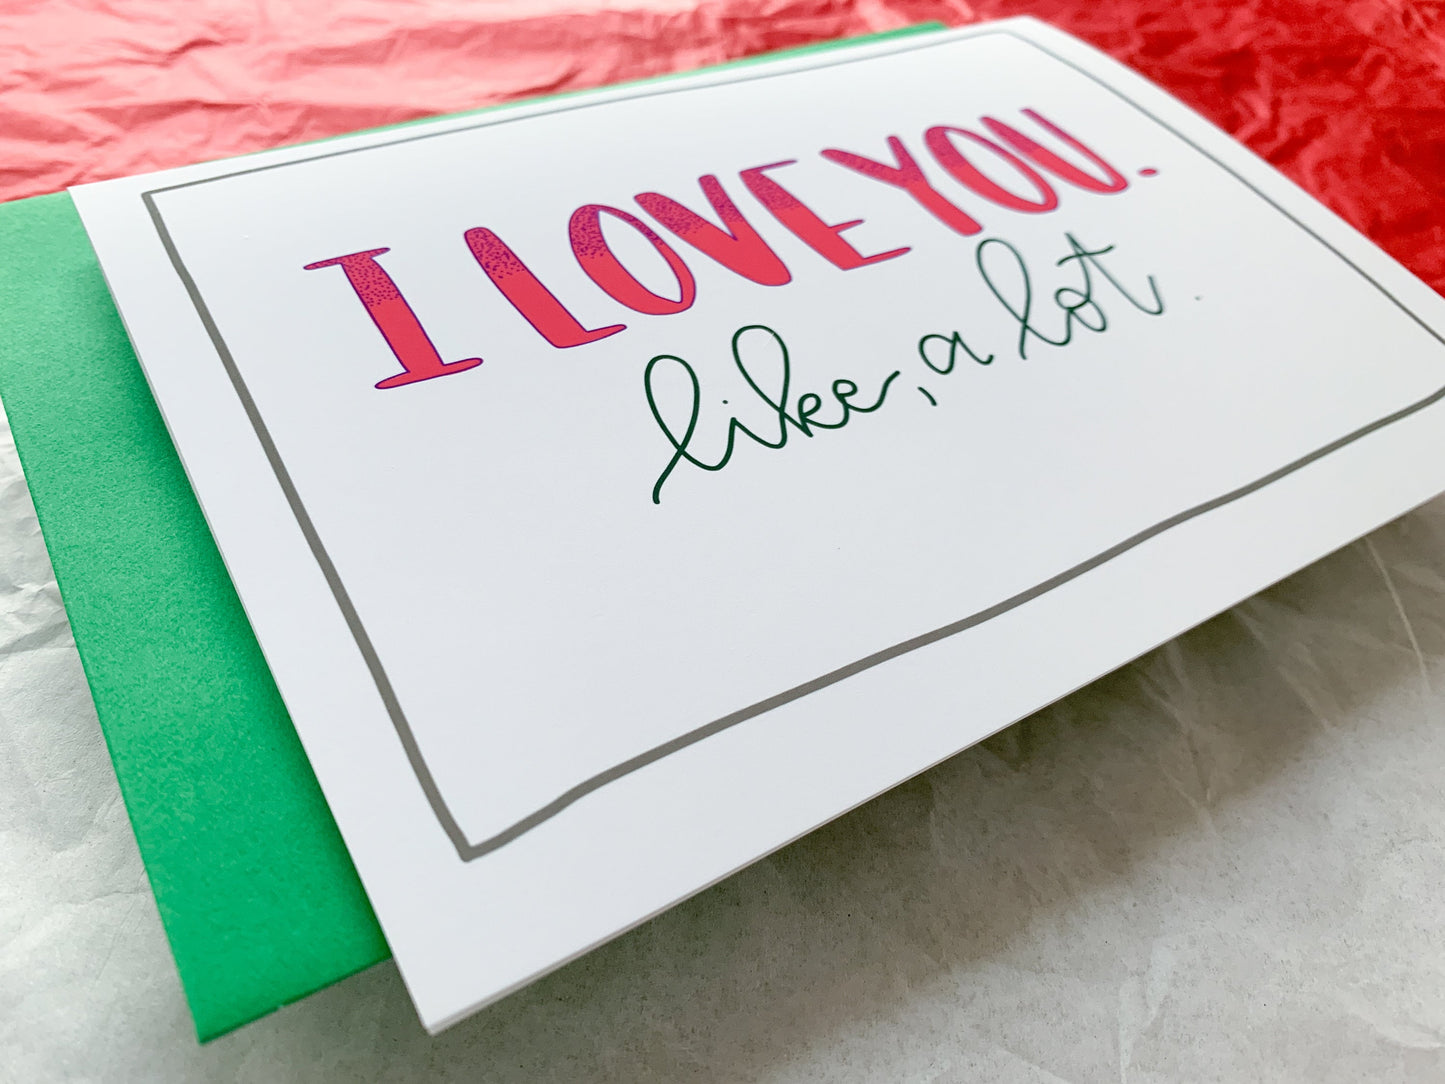 I Love You, Like A Lot Funny Handmade Valentine Card by StoneDonut Design